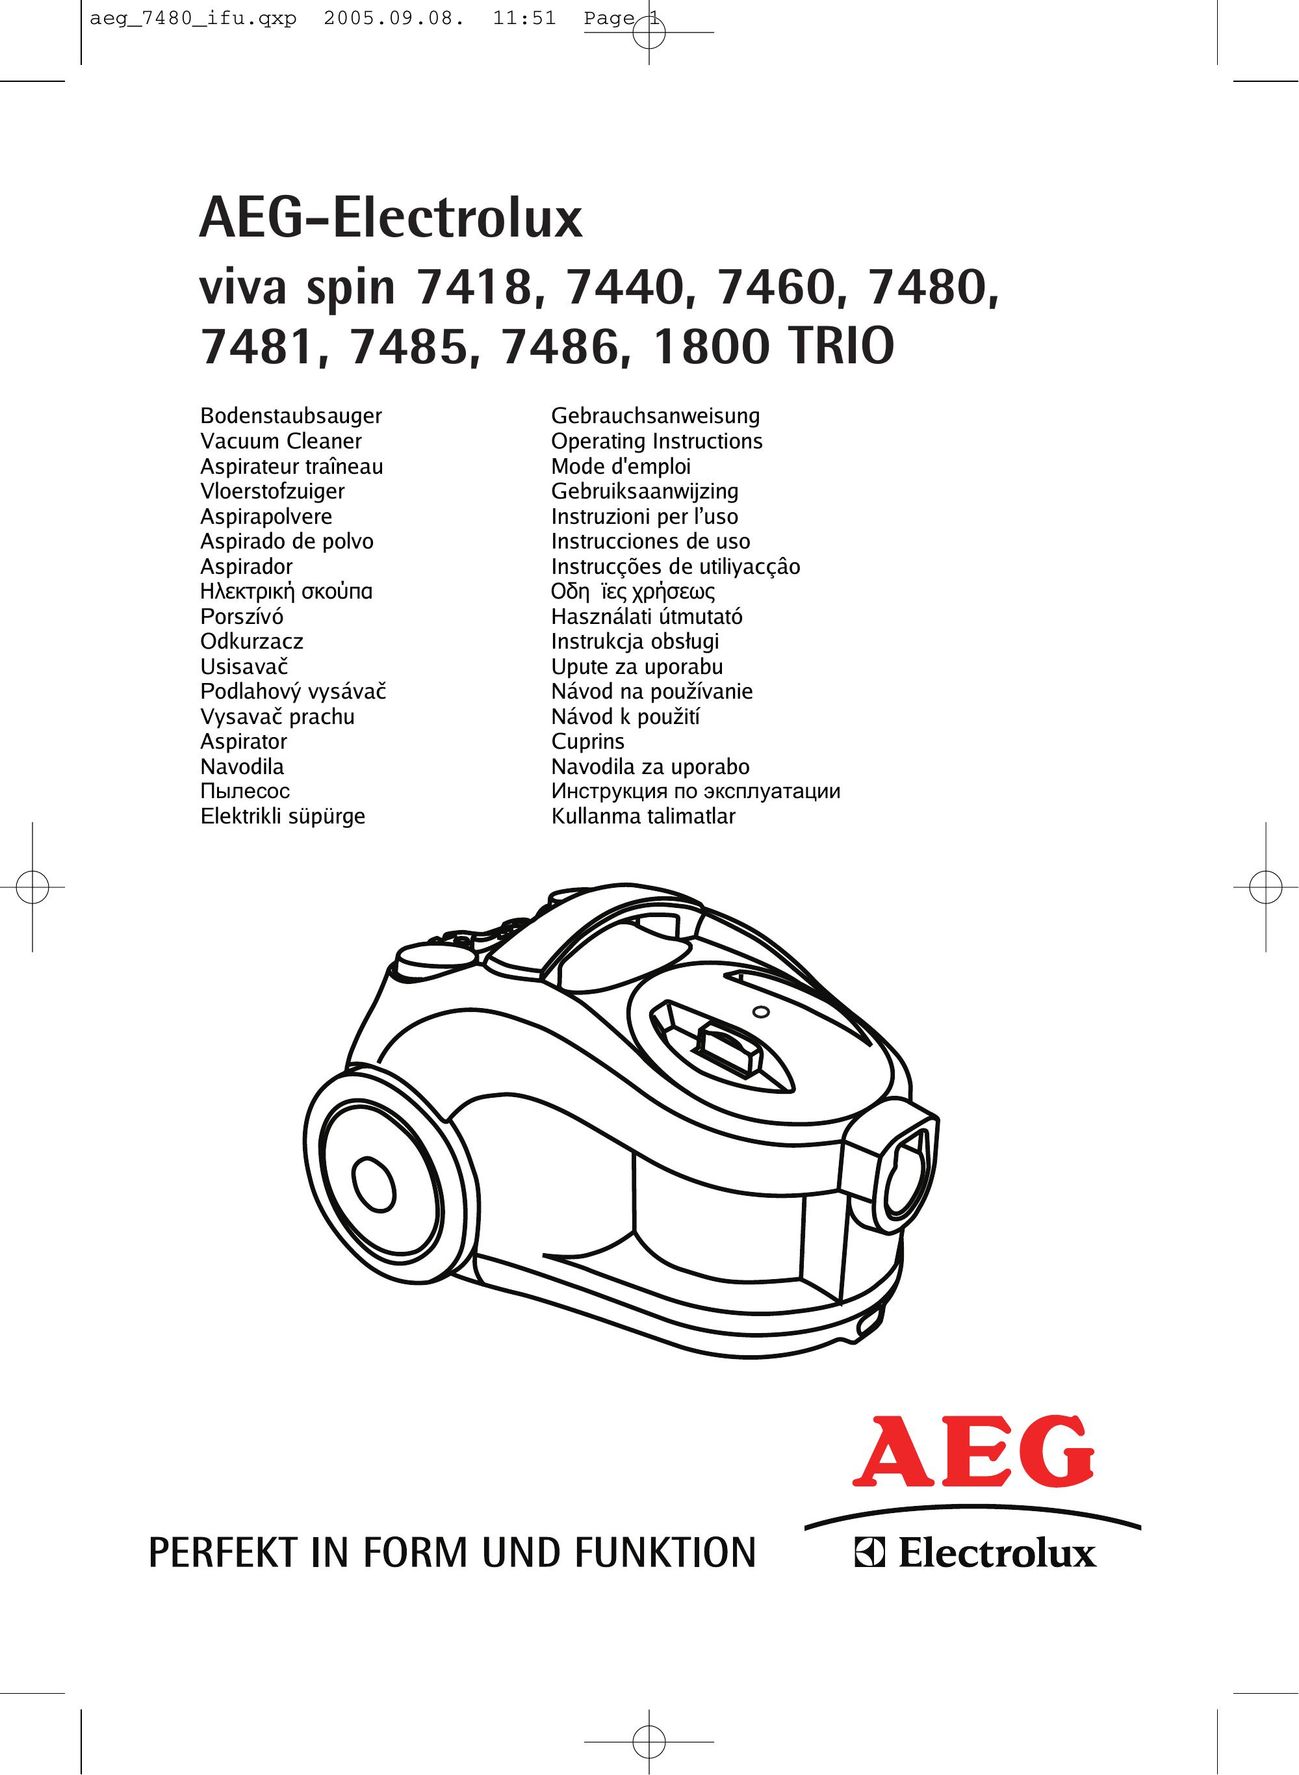 AEG 7481 Vacuum Cleaner User Manual